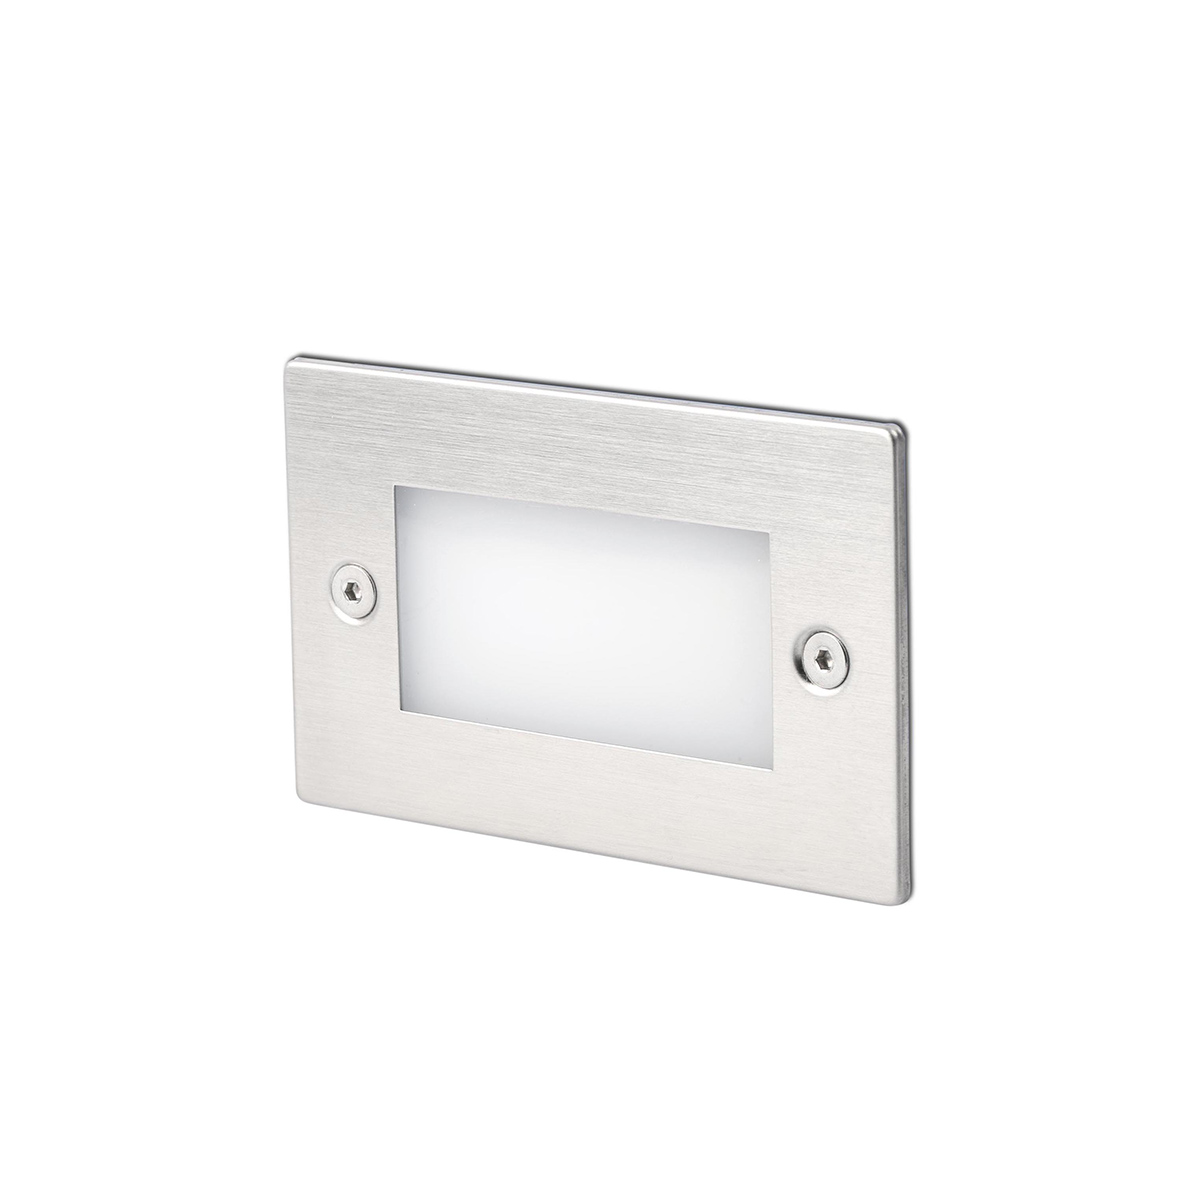 Spot LED incastrabil de exterior cu protectie IP65 GRON 70134